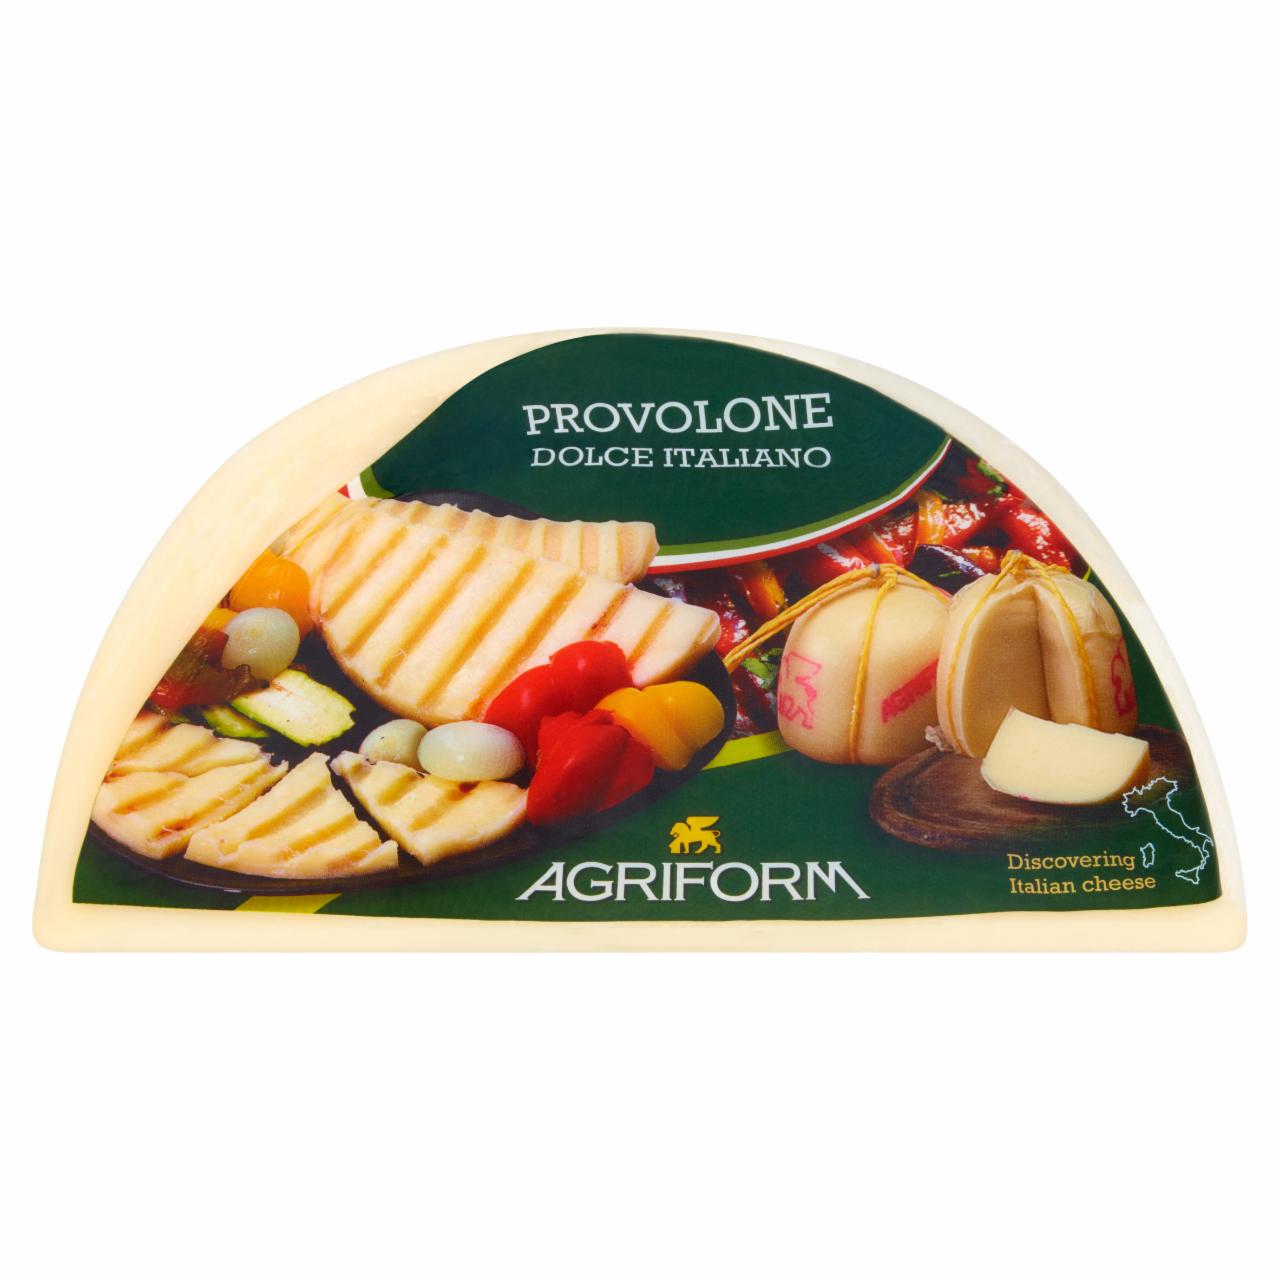 Képek - Agriform Provolone Dolce Italiano sajt 200 g